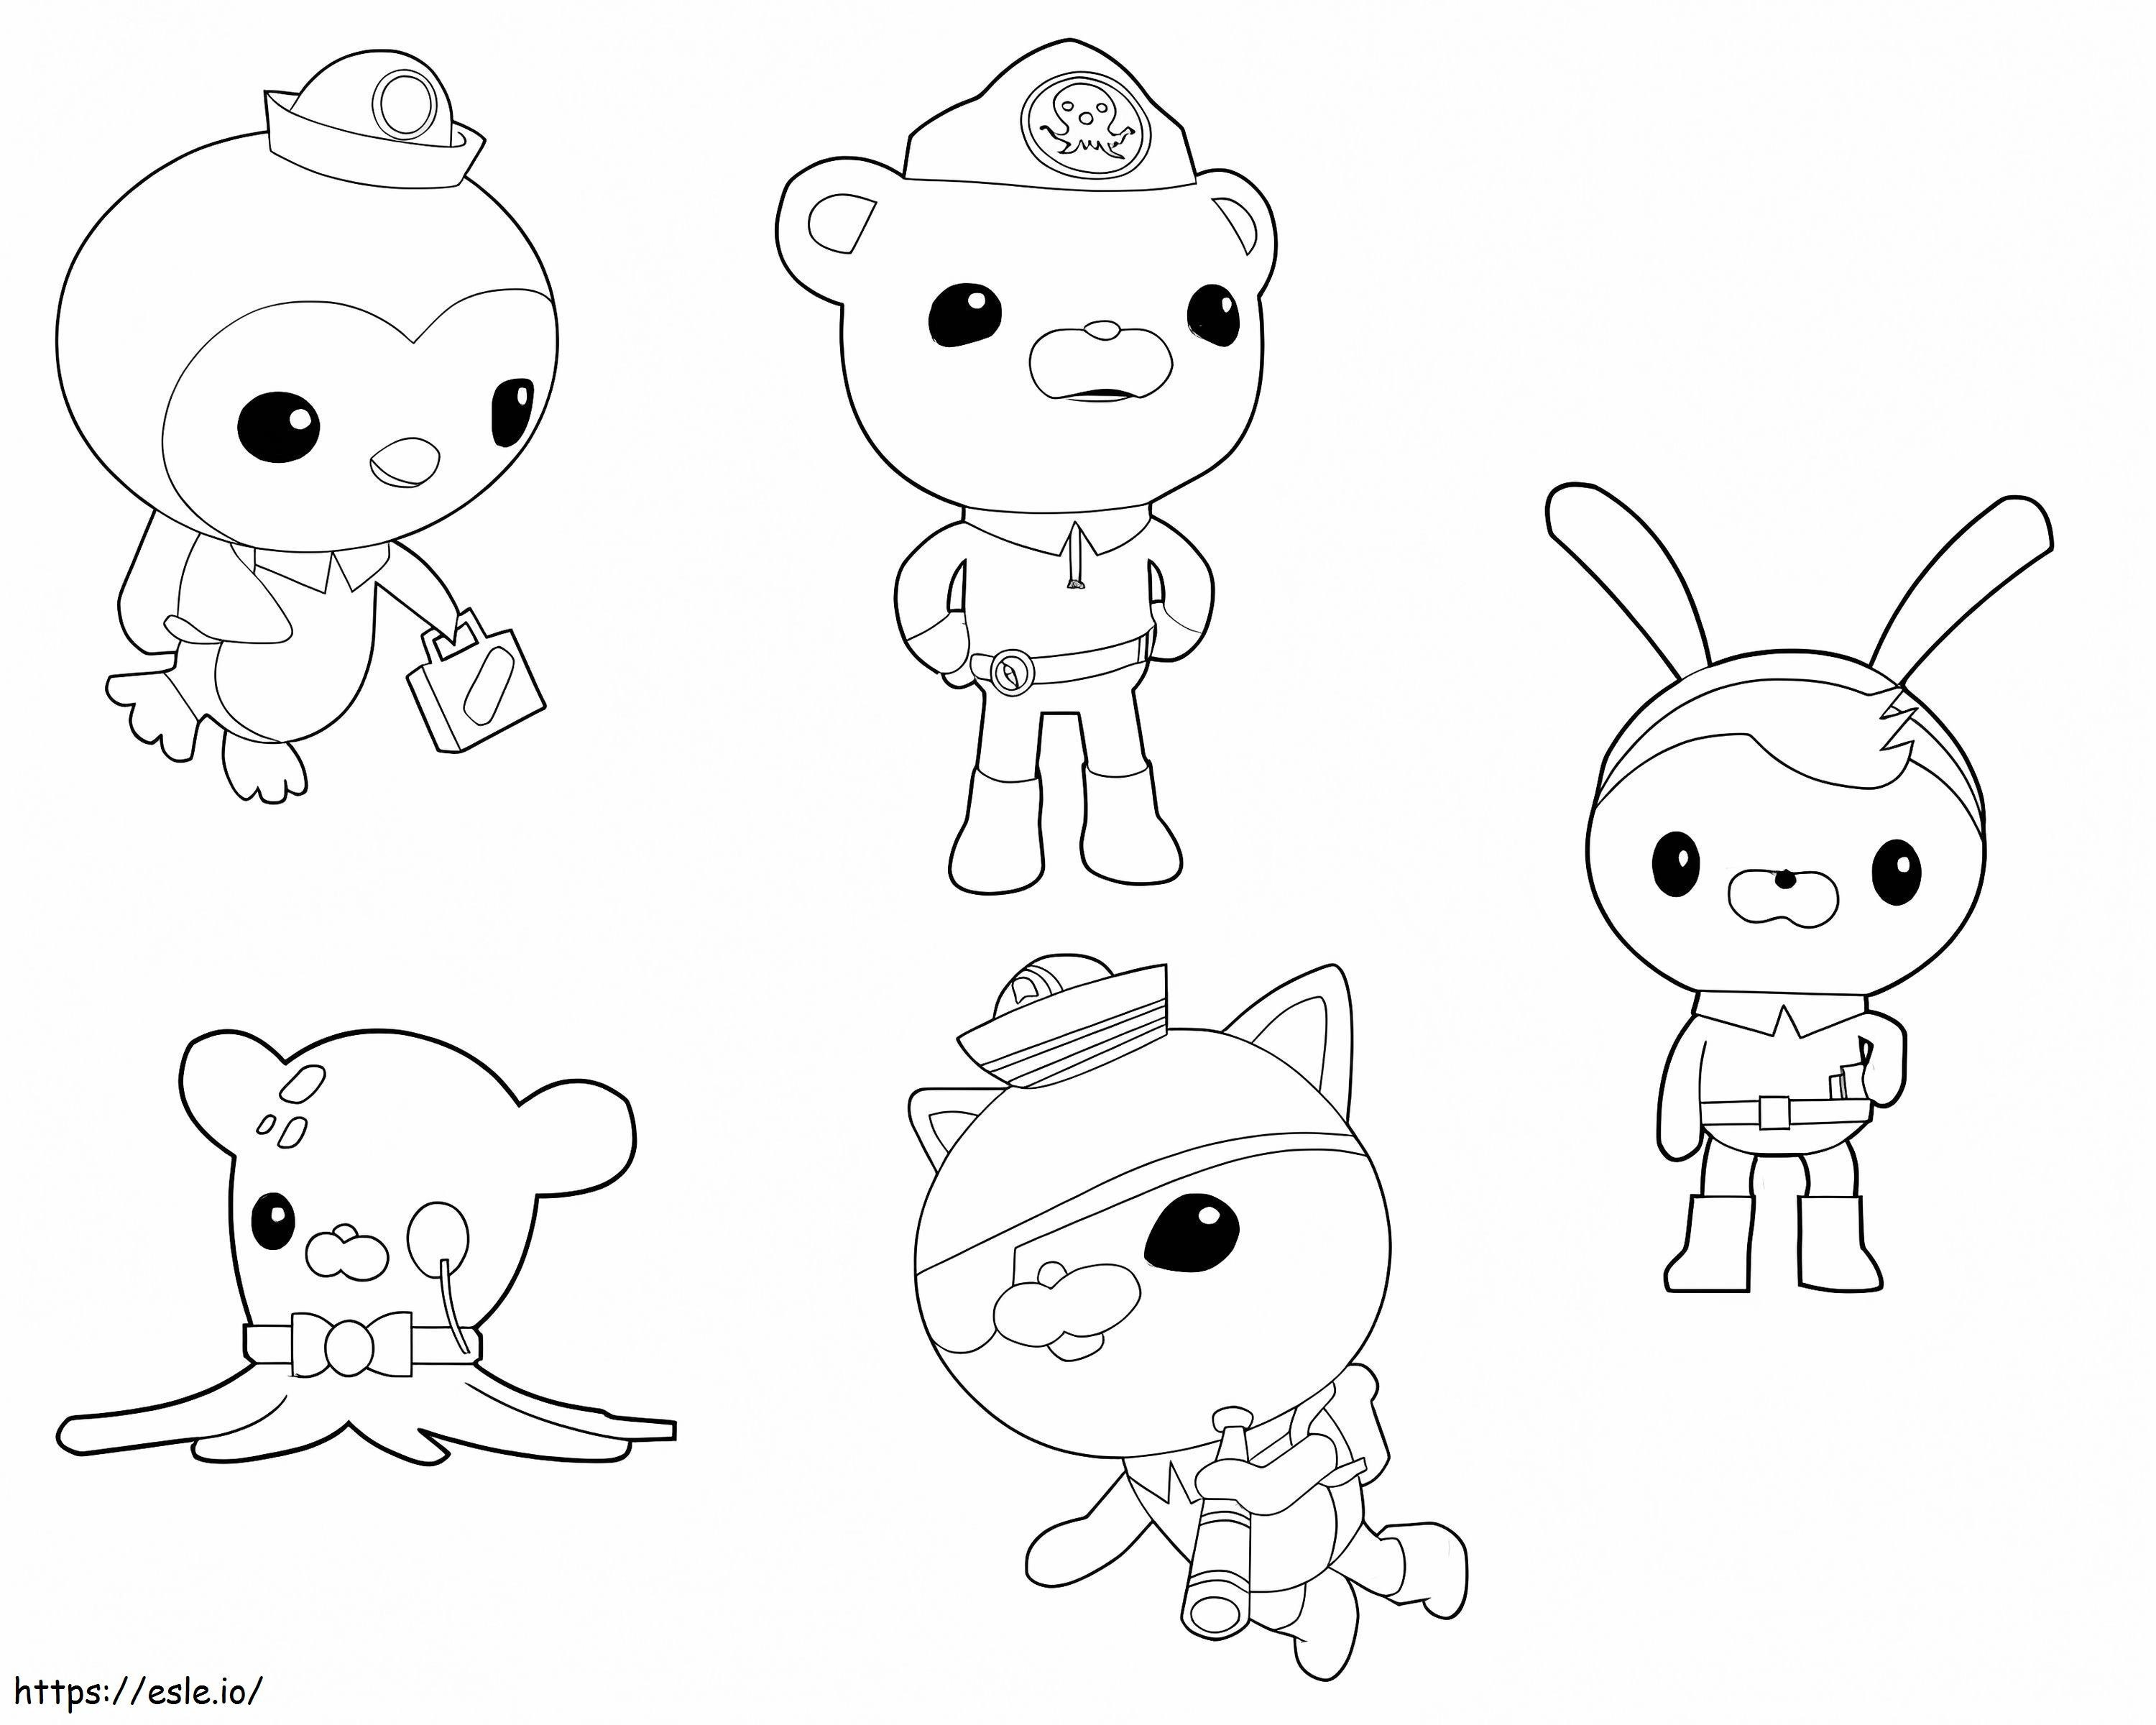 Octonauts Main Characters coloring page